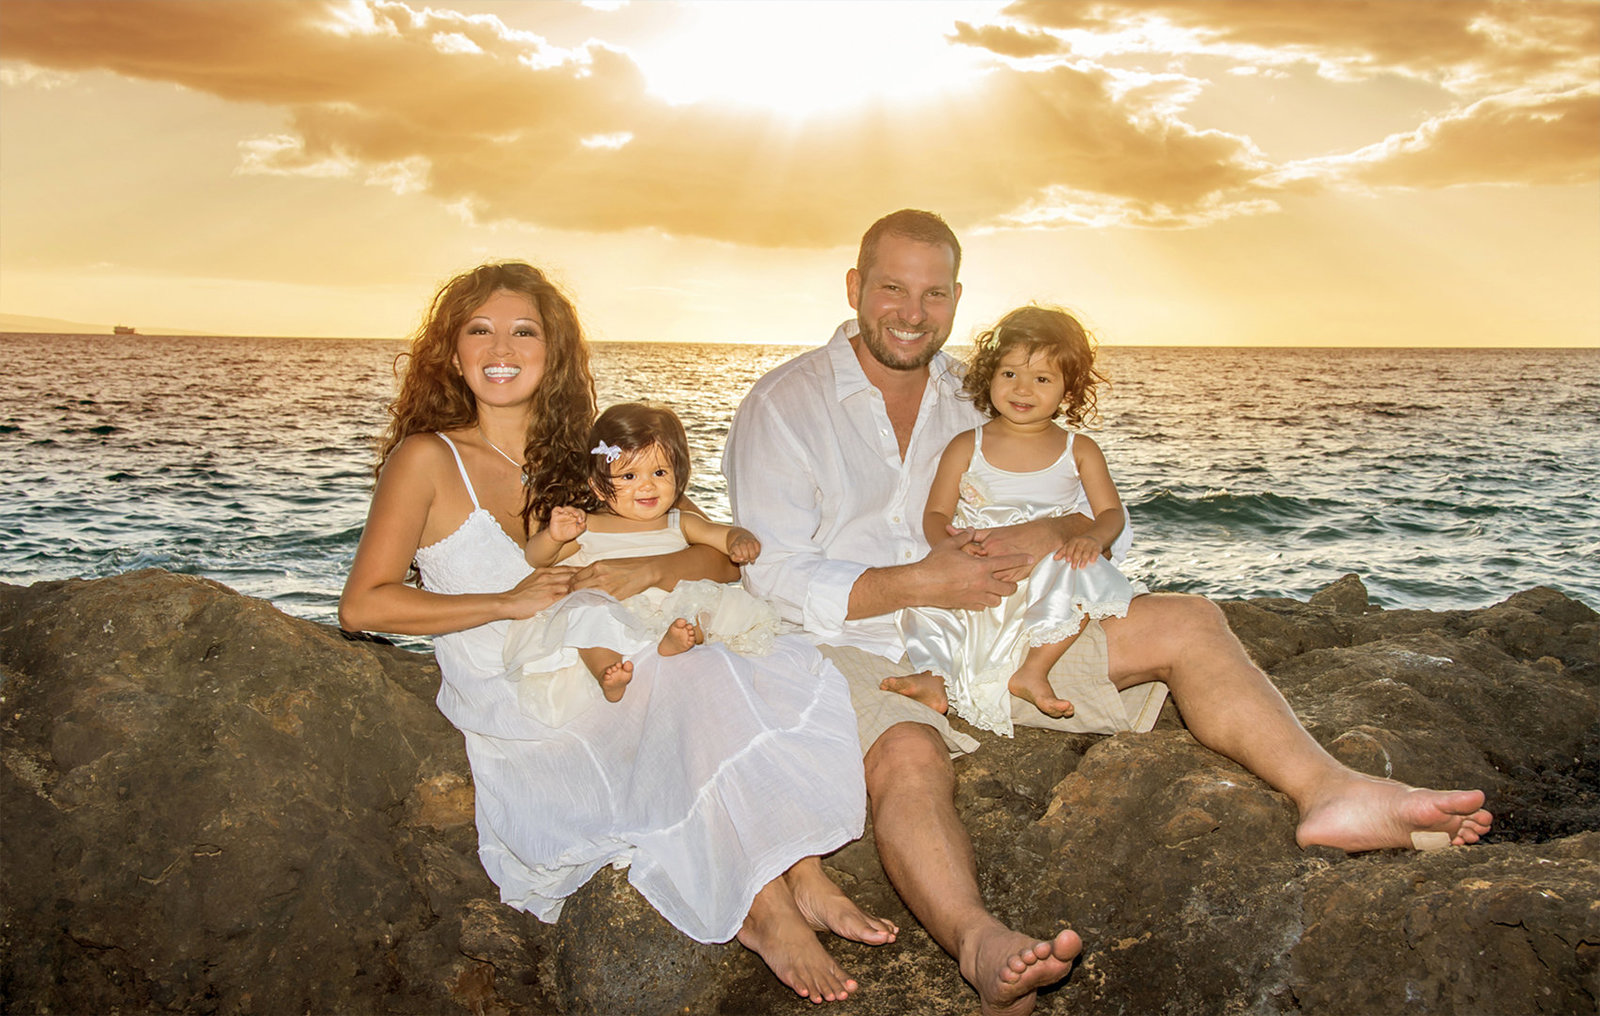 Family portrait photographers in Kauai